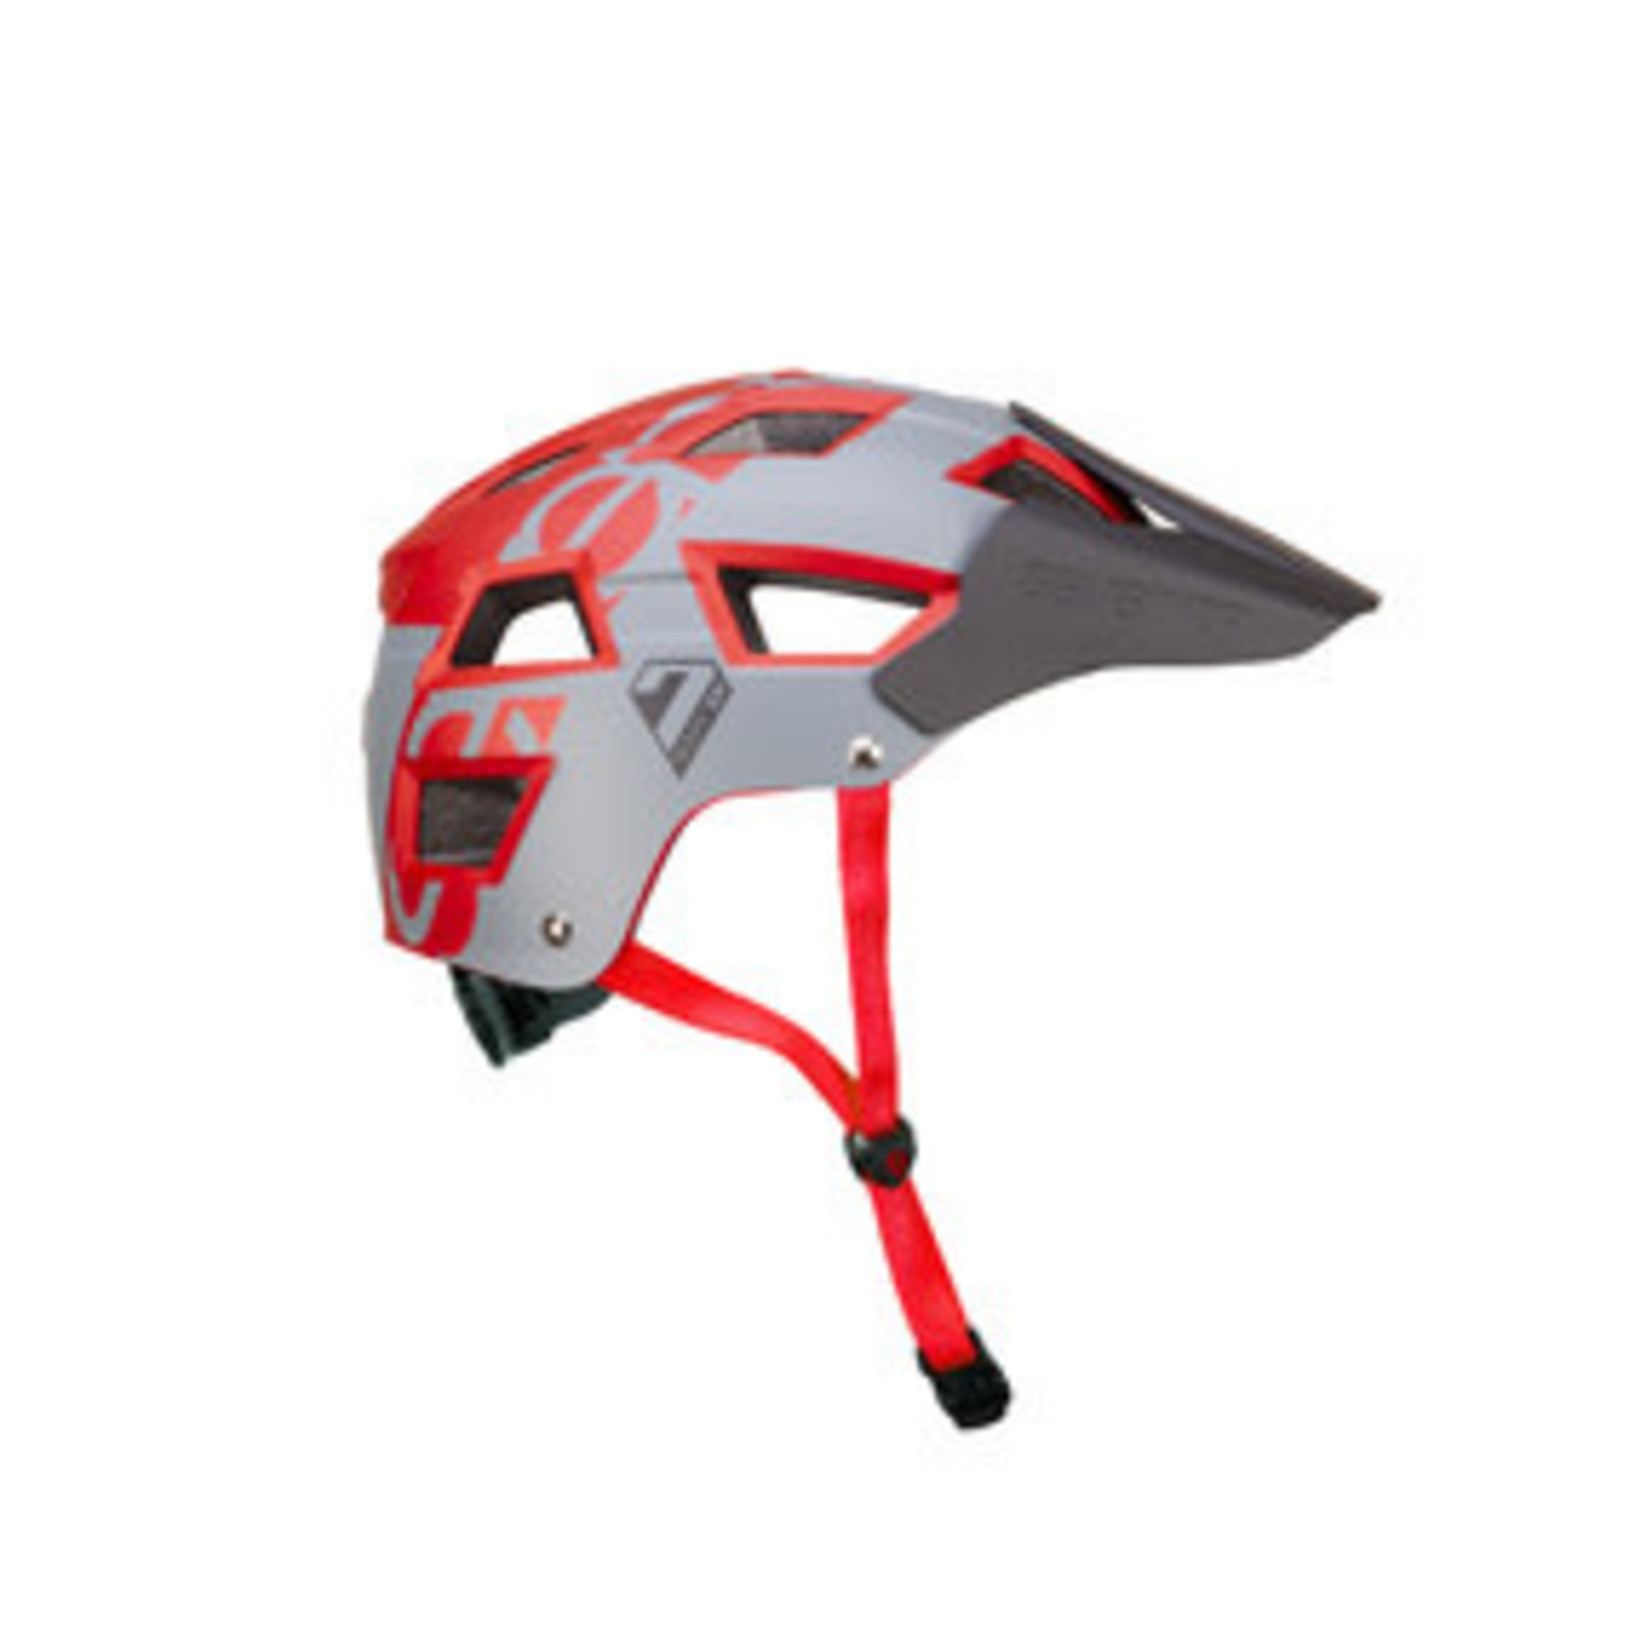 7iDP M-5 Helmet, Red/Grey L/XL (58-61cm)